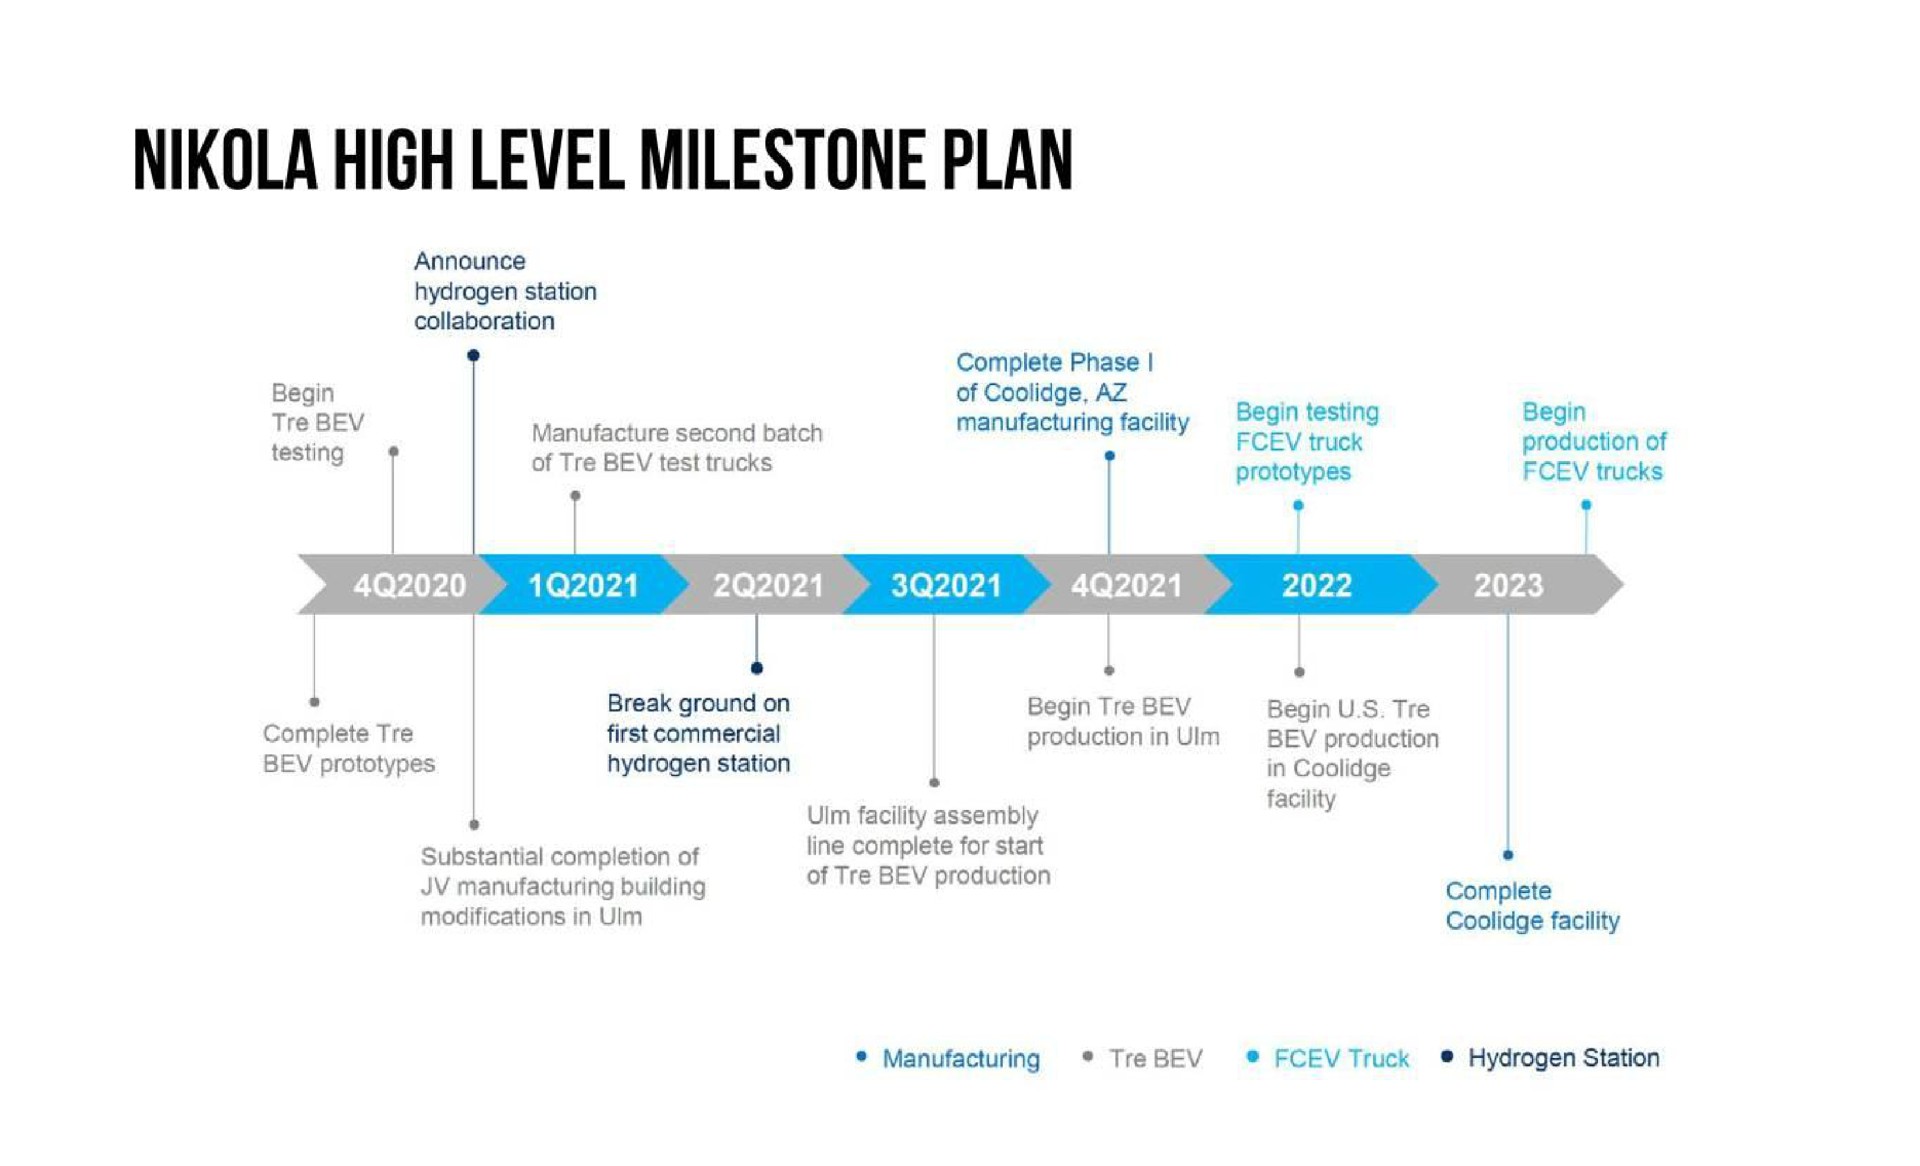 high level milestone plan | Nikola